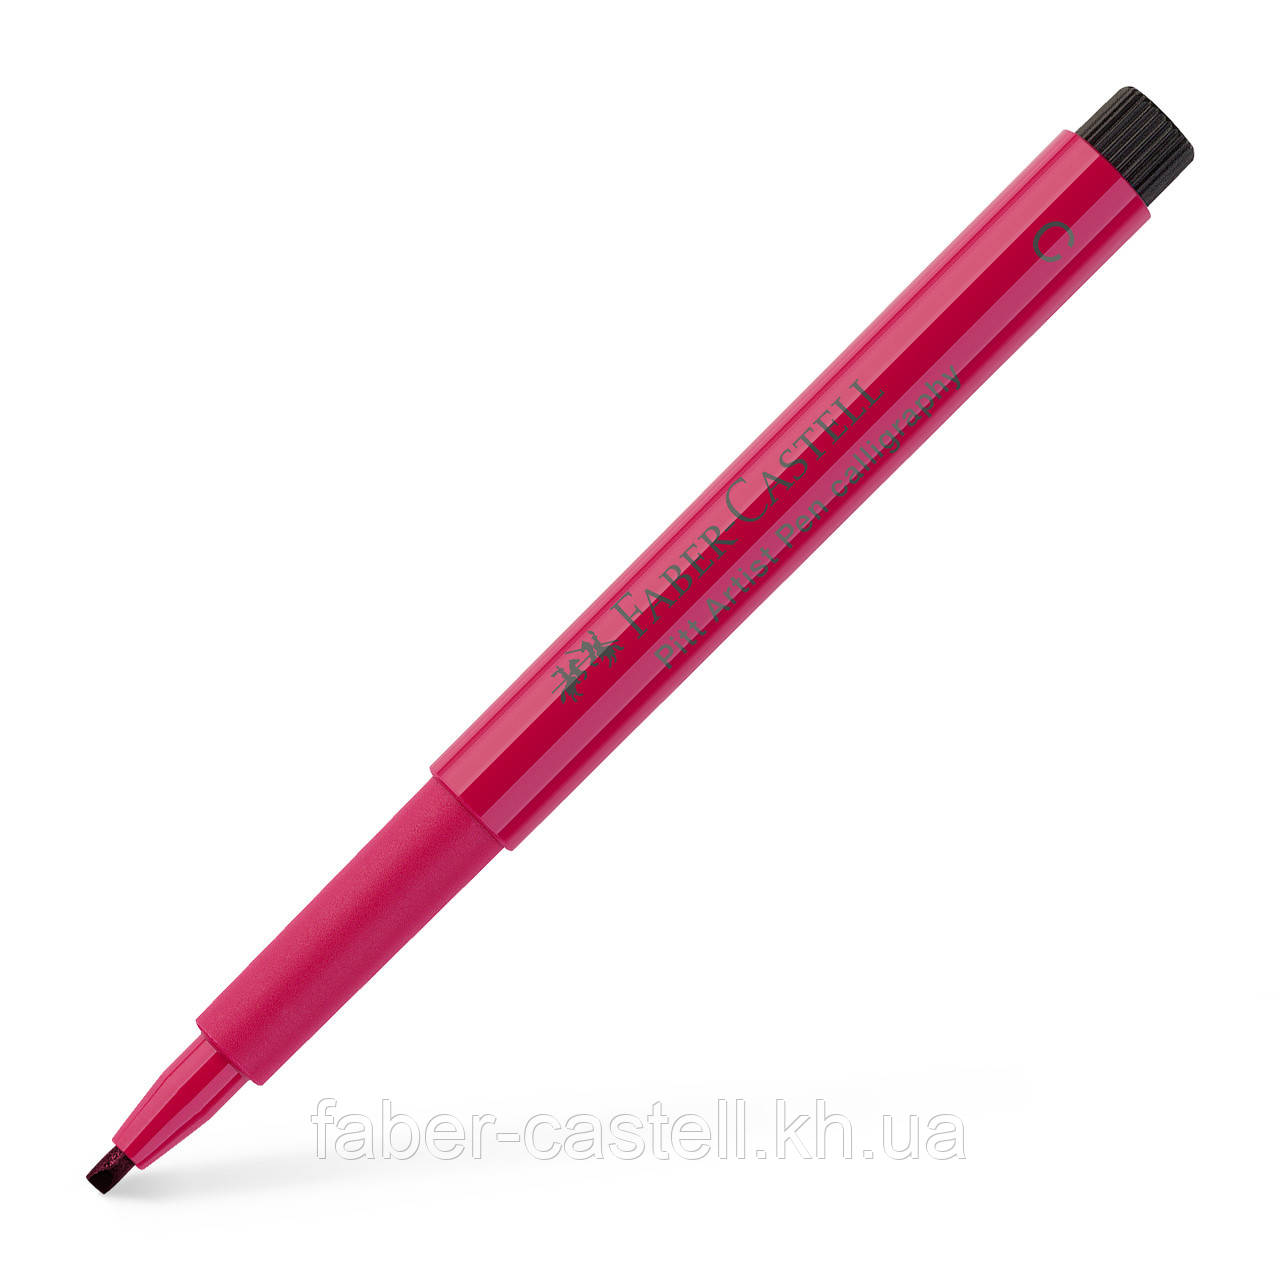 Ручка капілярна для каліграфії Faber-Castell PITT Calligraphy, колір рожевий кармін № 127, 167527